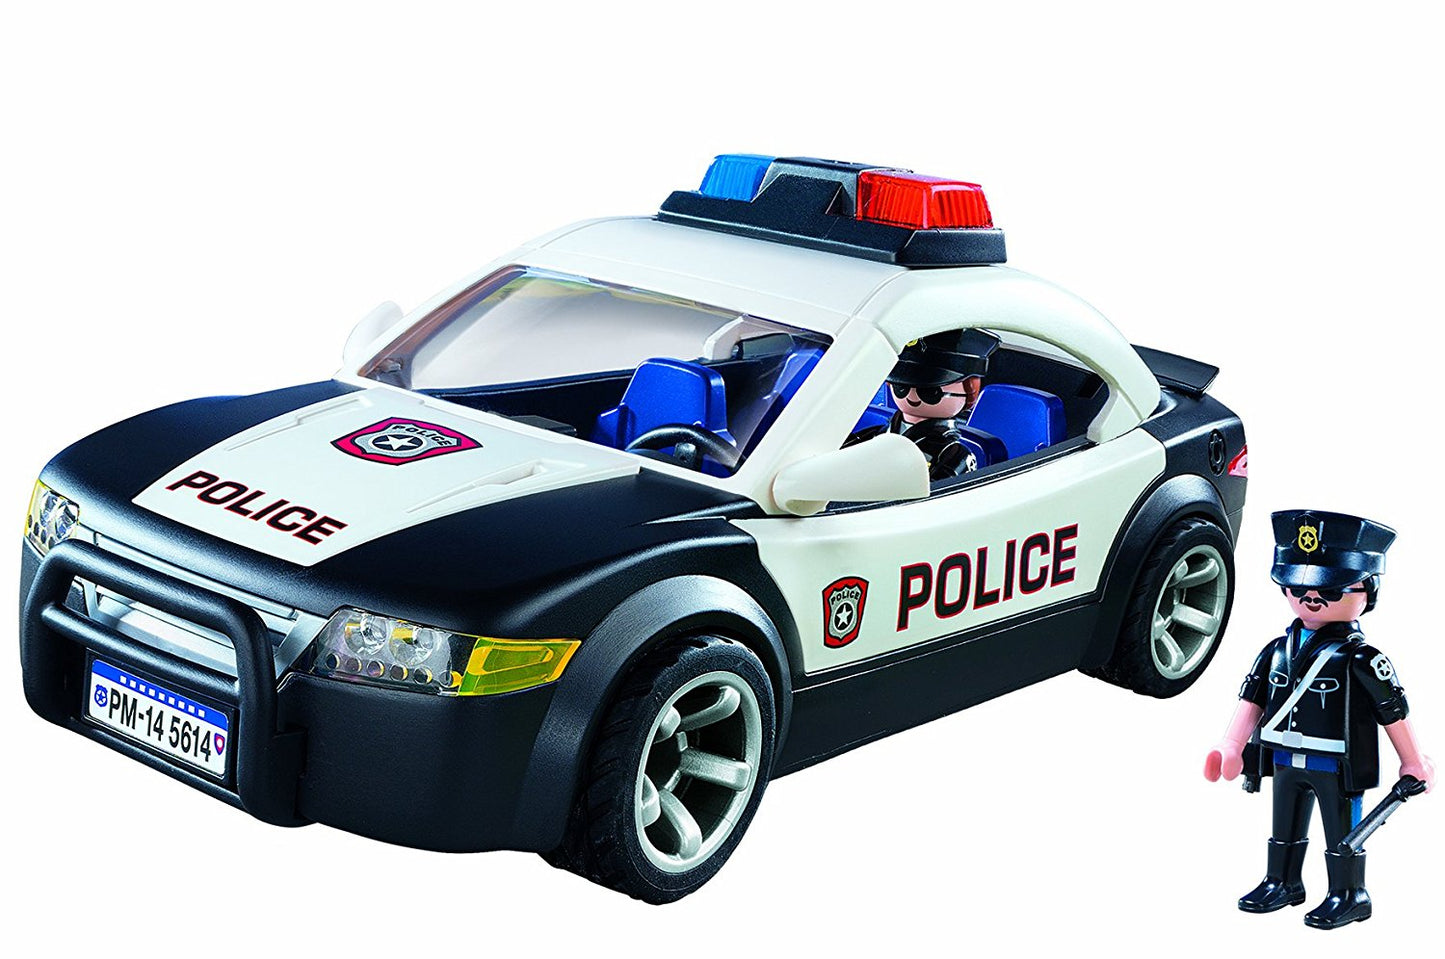 PLAYMOBIL Police Cruiser 5673, City Action